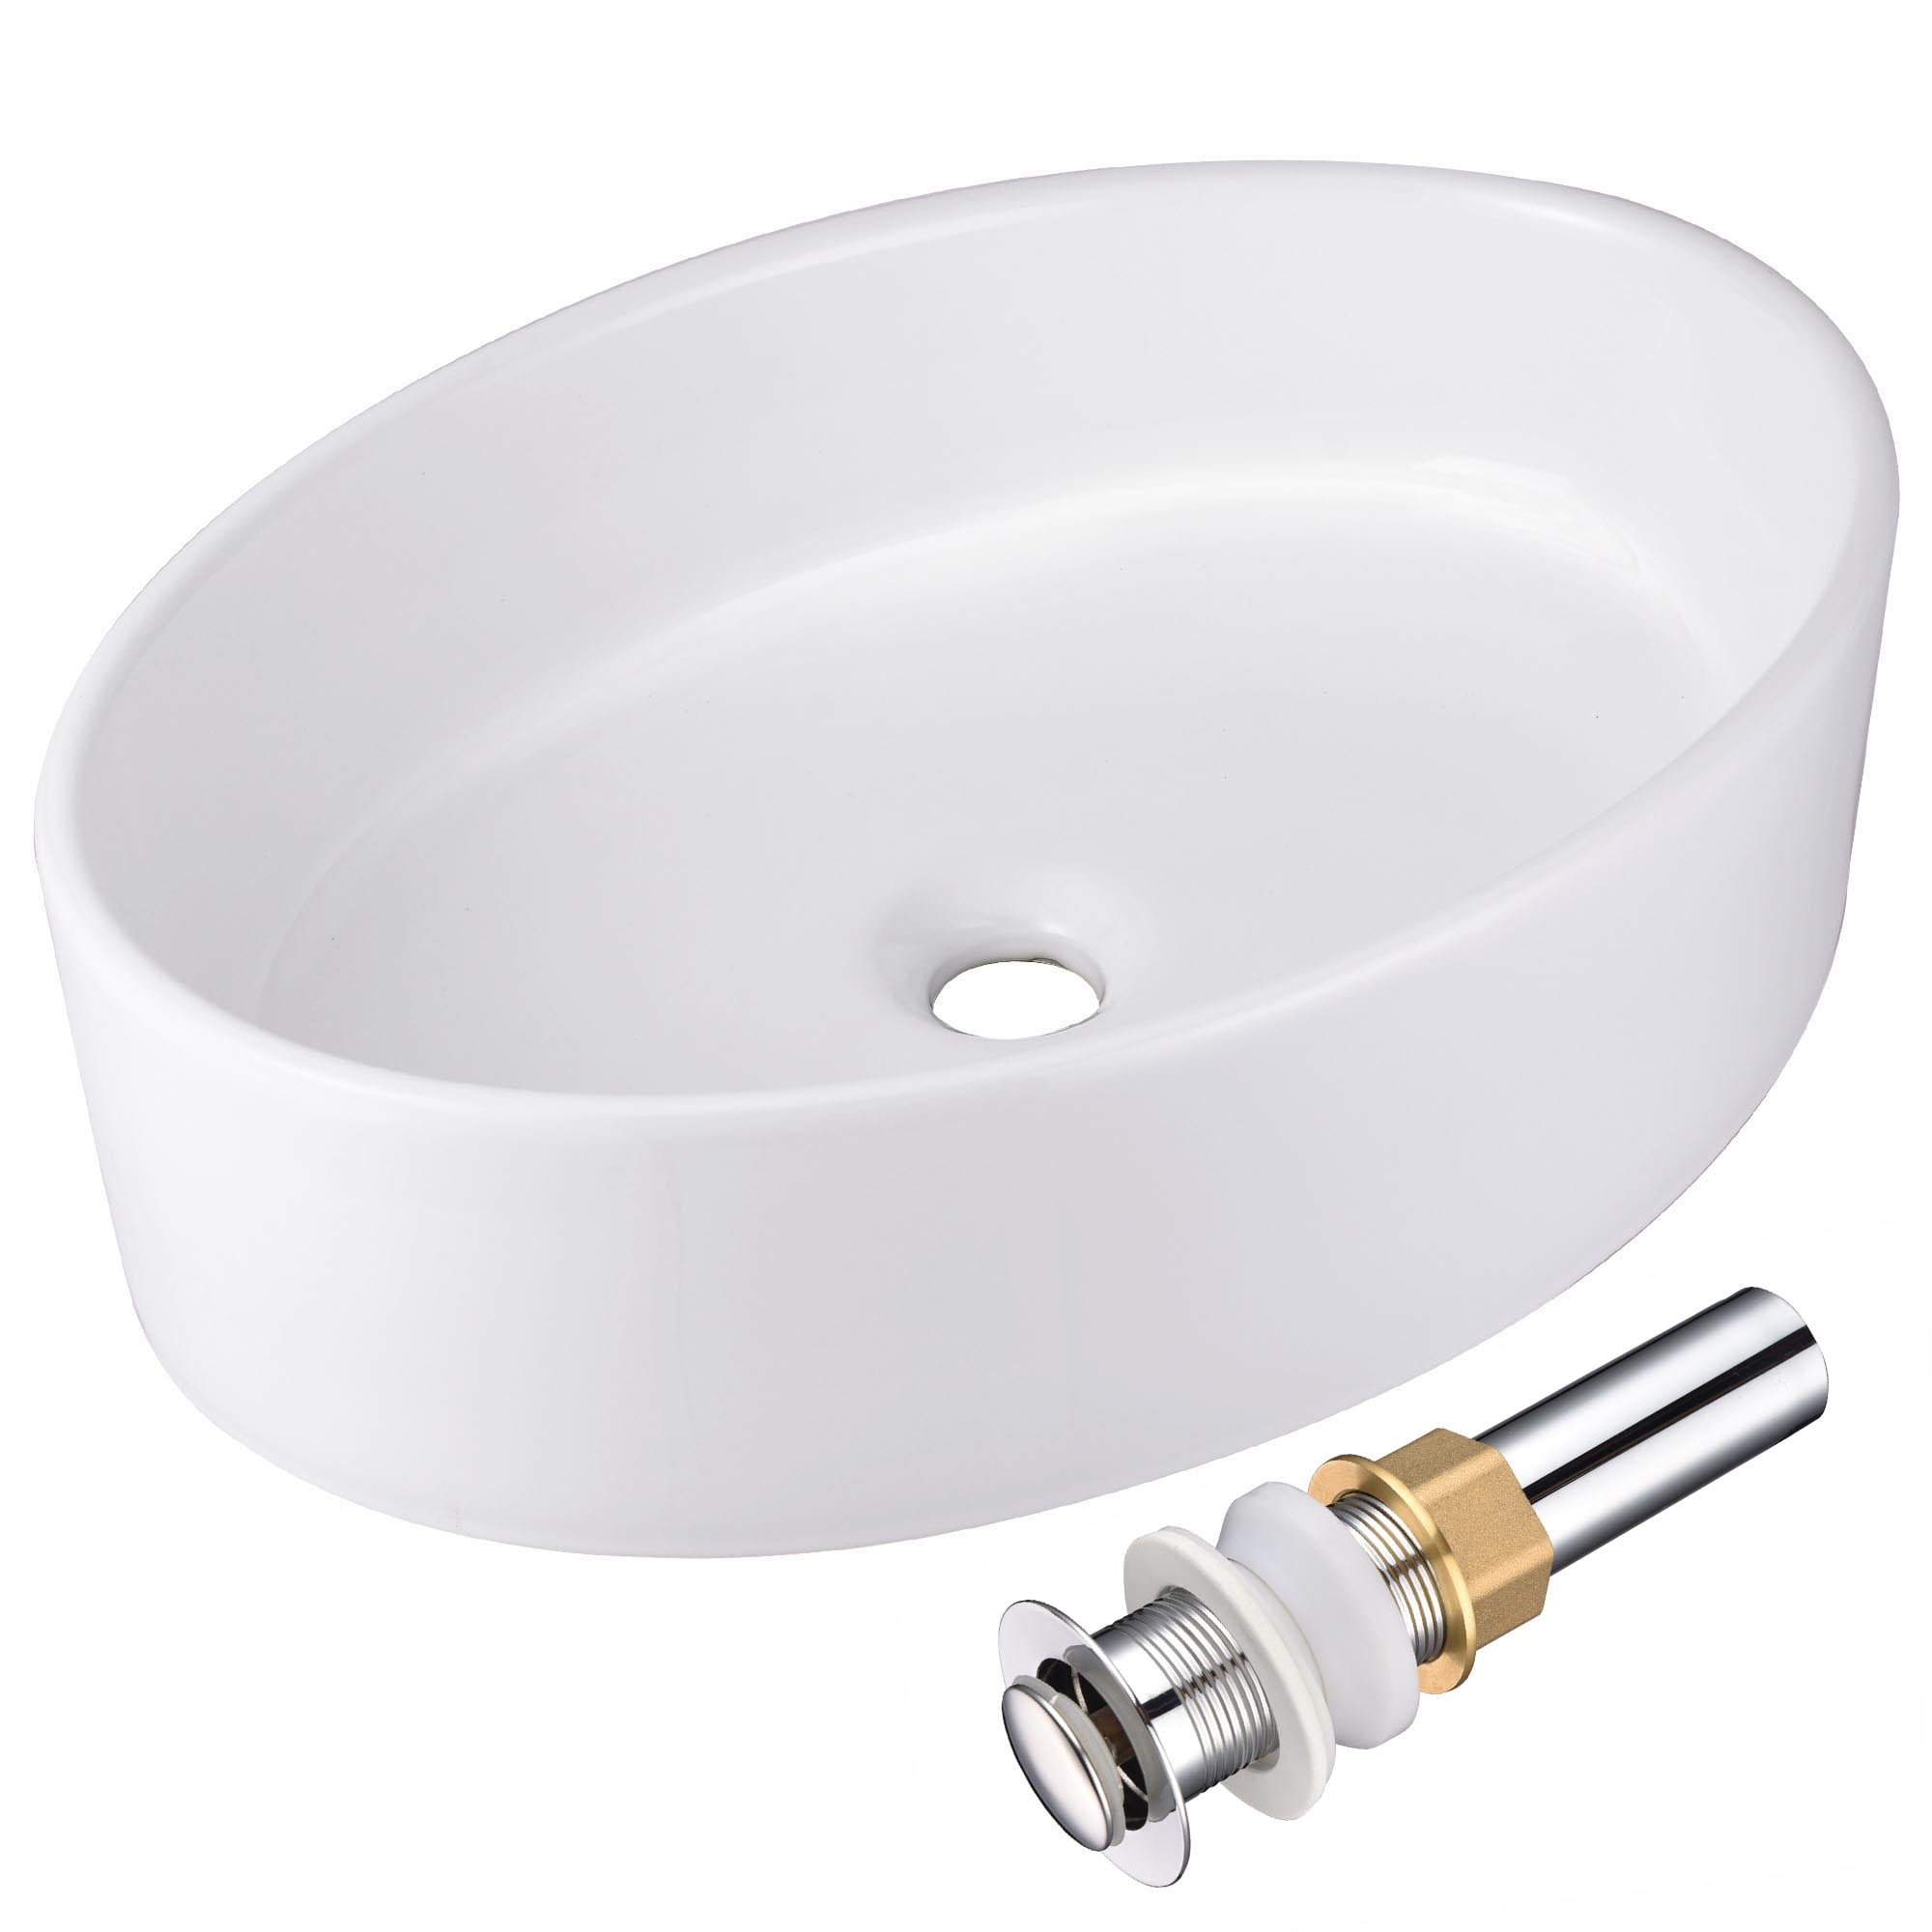 iBathUK Modern Oval Gloss White Countertop Basin Sink Ceramic 